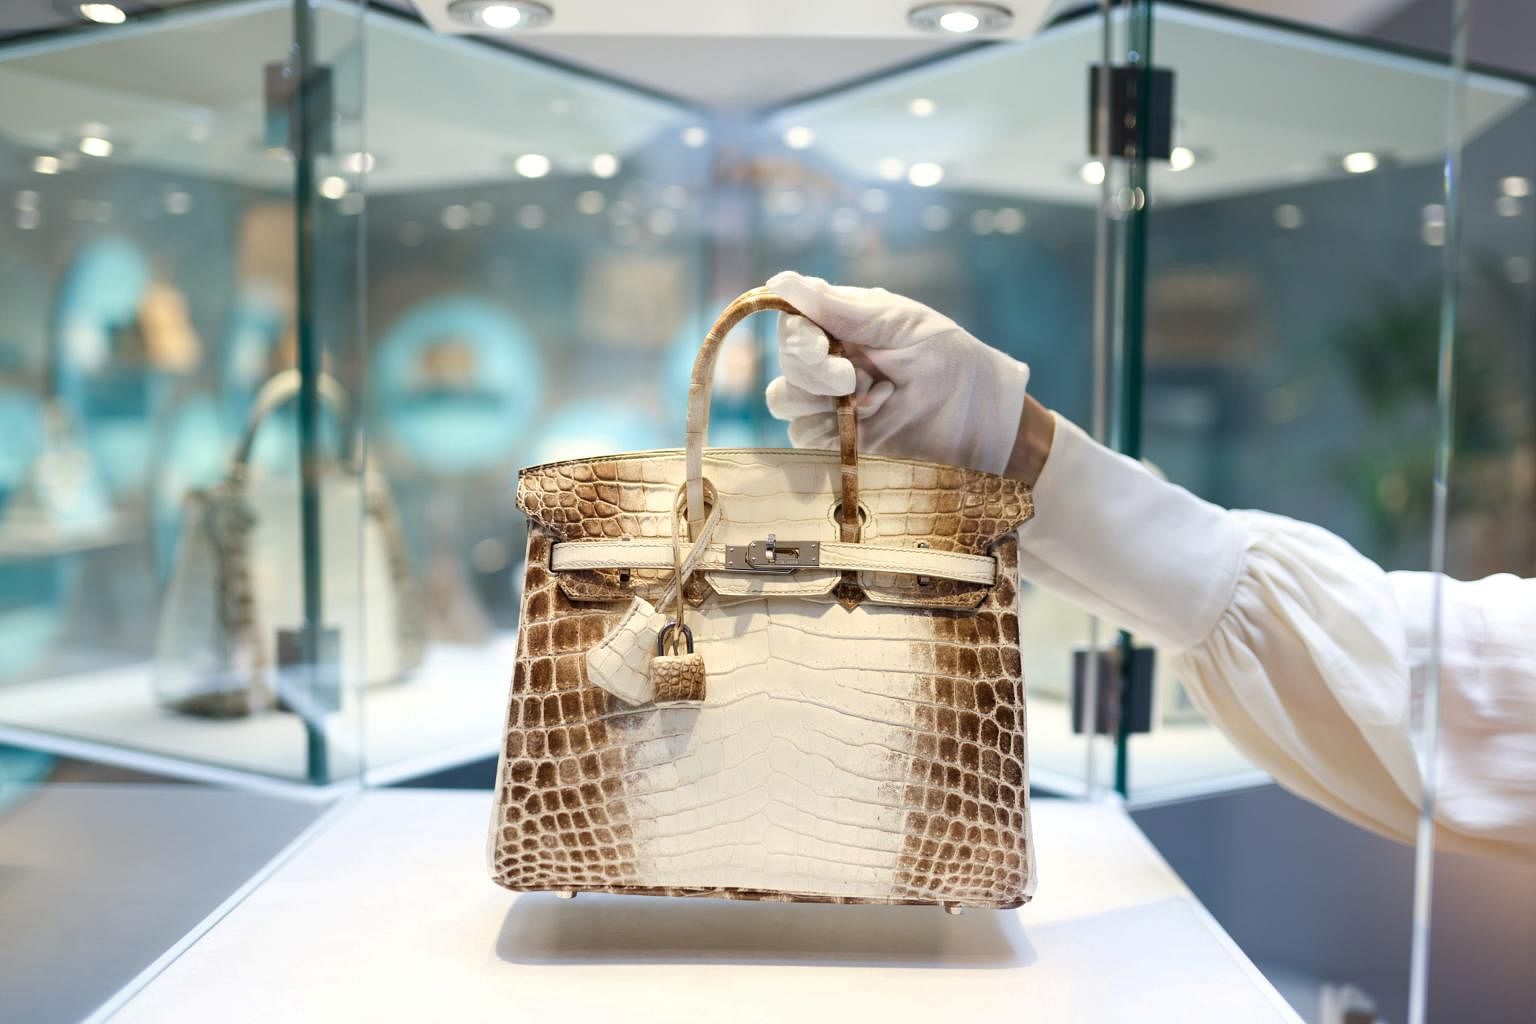 Birkin bag maker Hermes reinforces rosy view of China